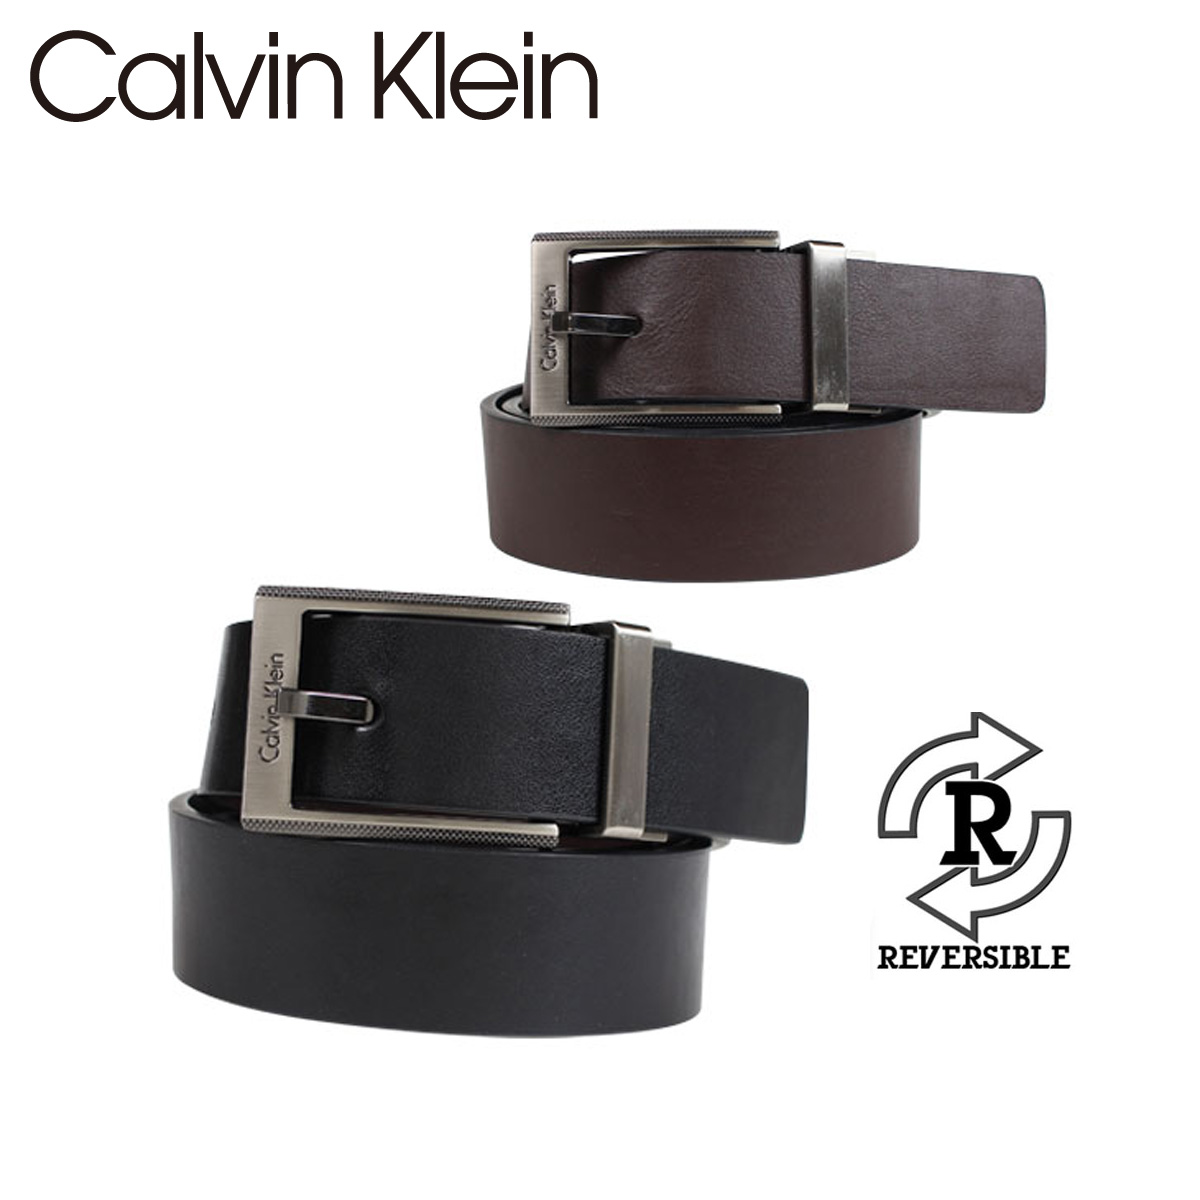 calvin klein reversible belt